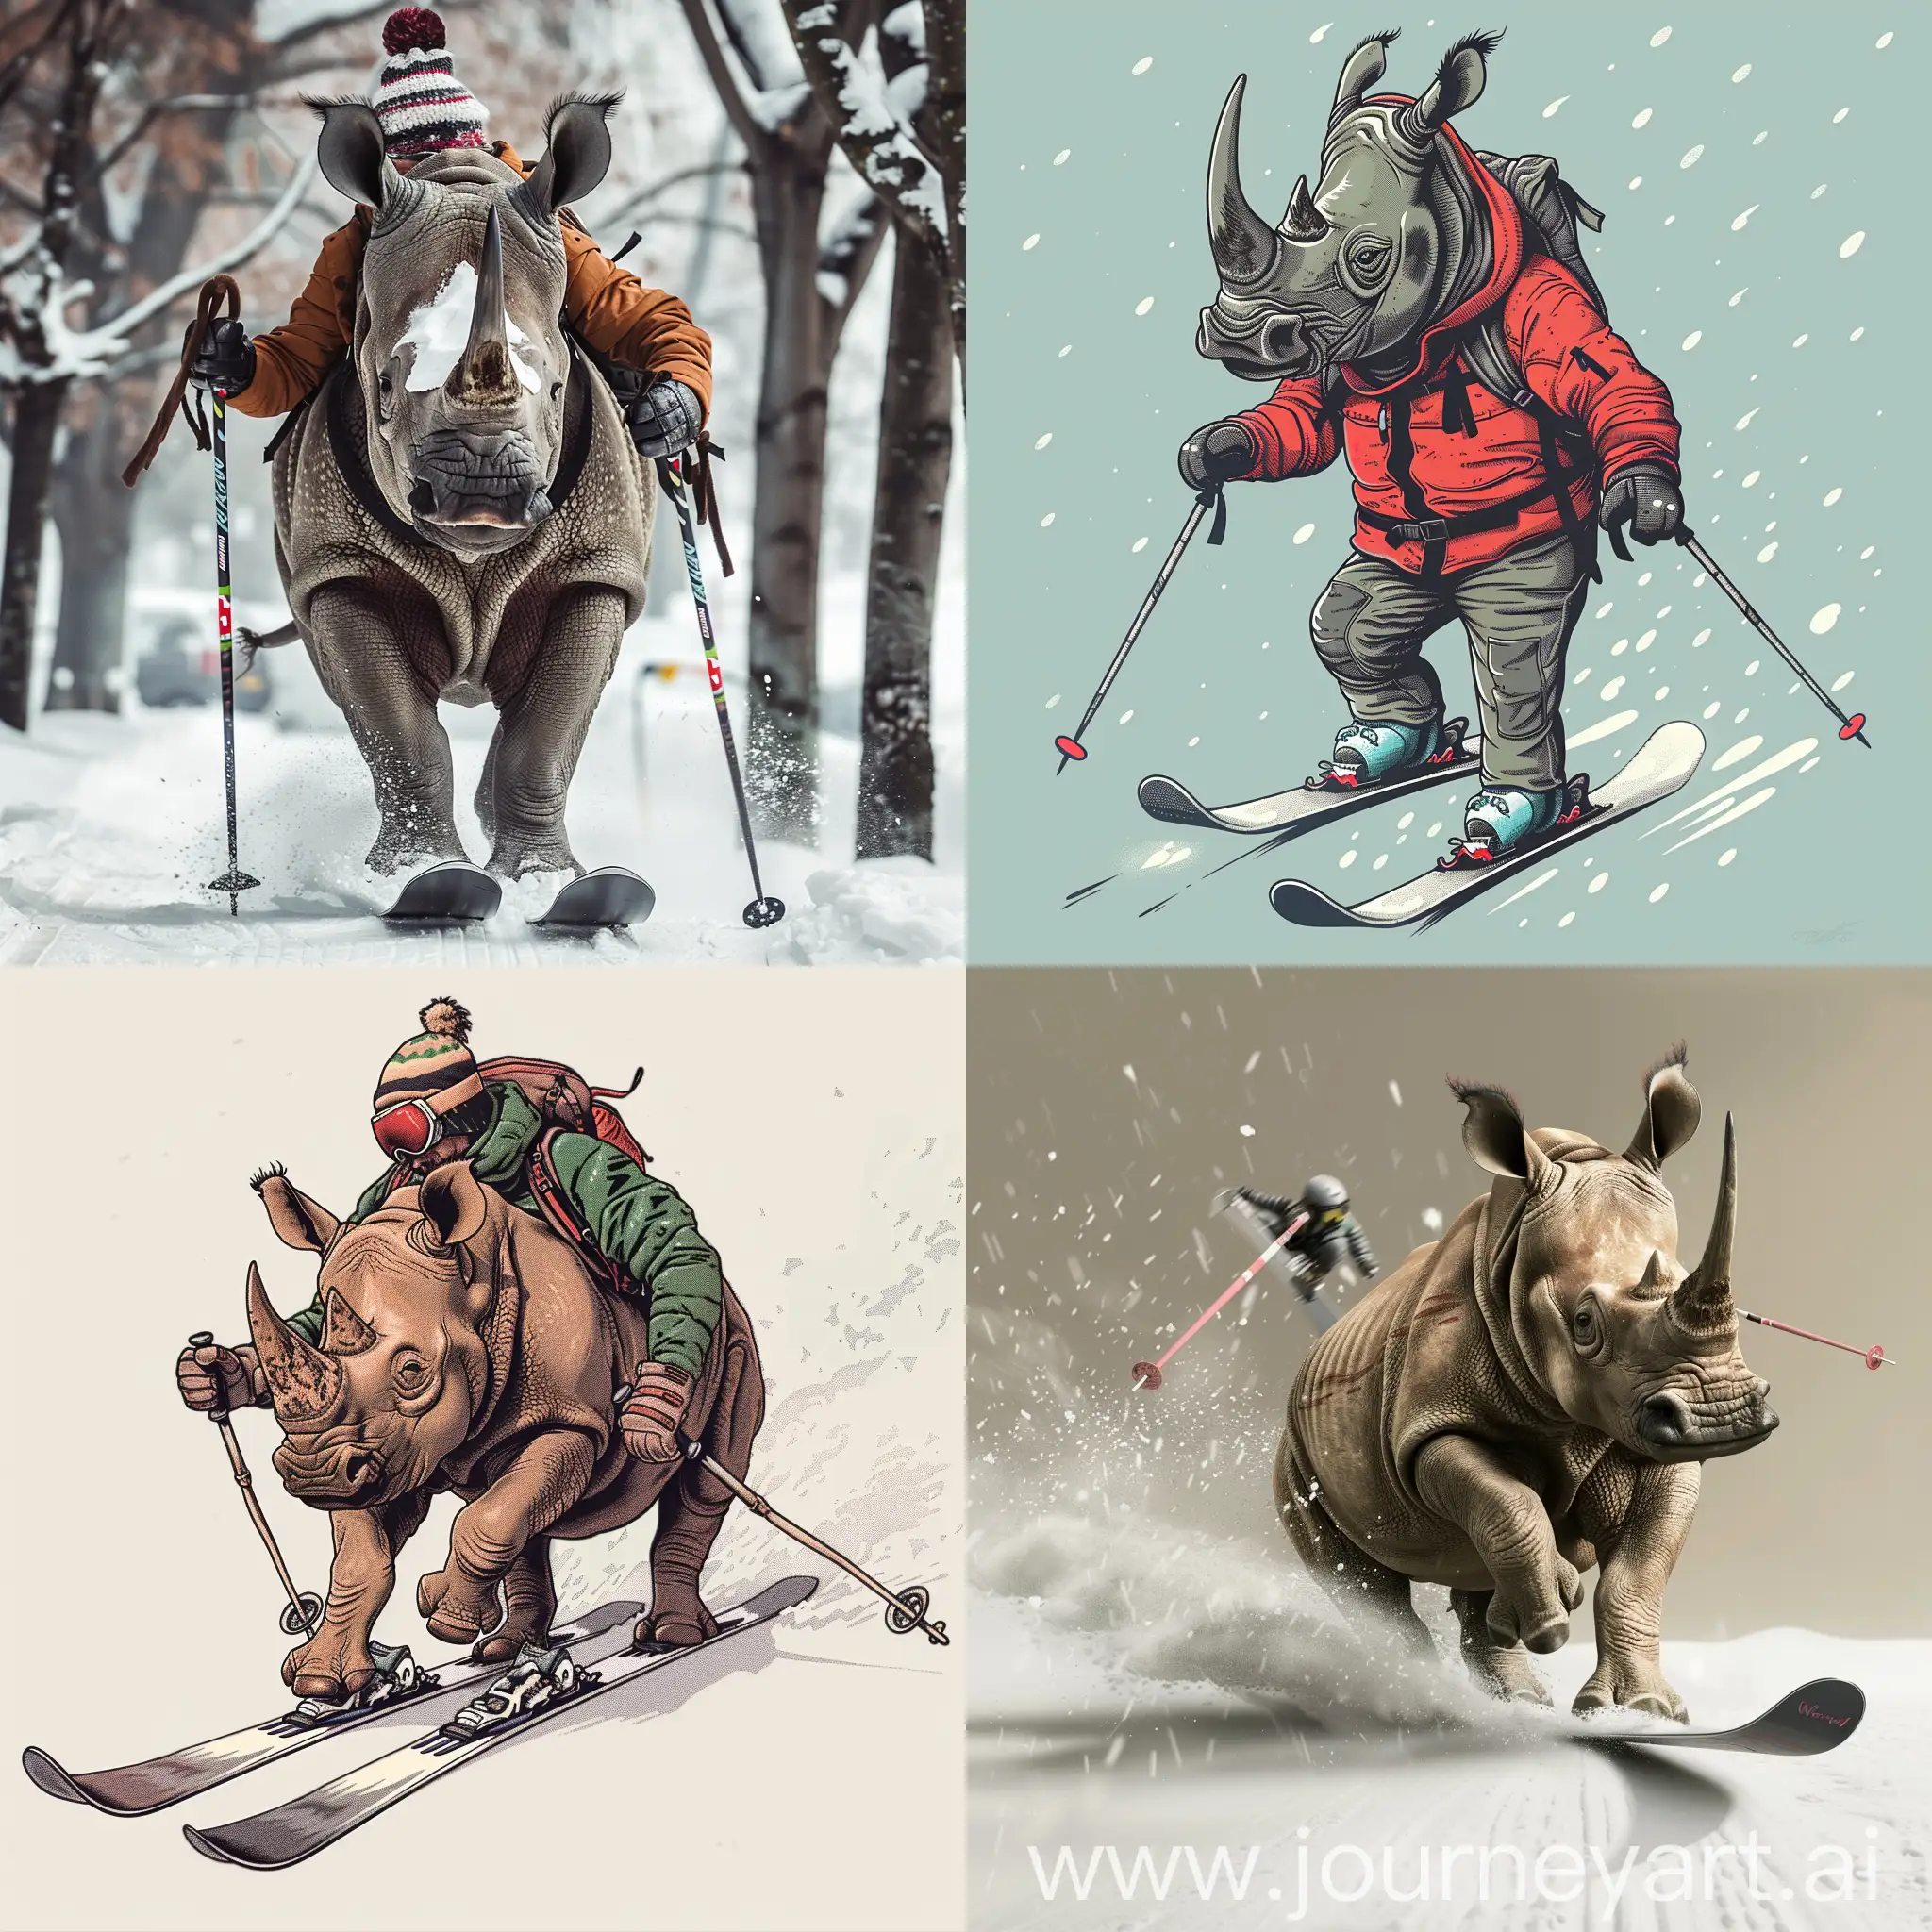 Adventurous-Rhinoceros-Skiing-on-Snowy-Slopes